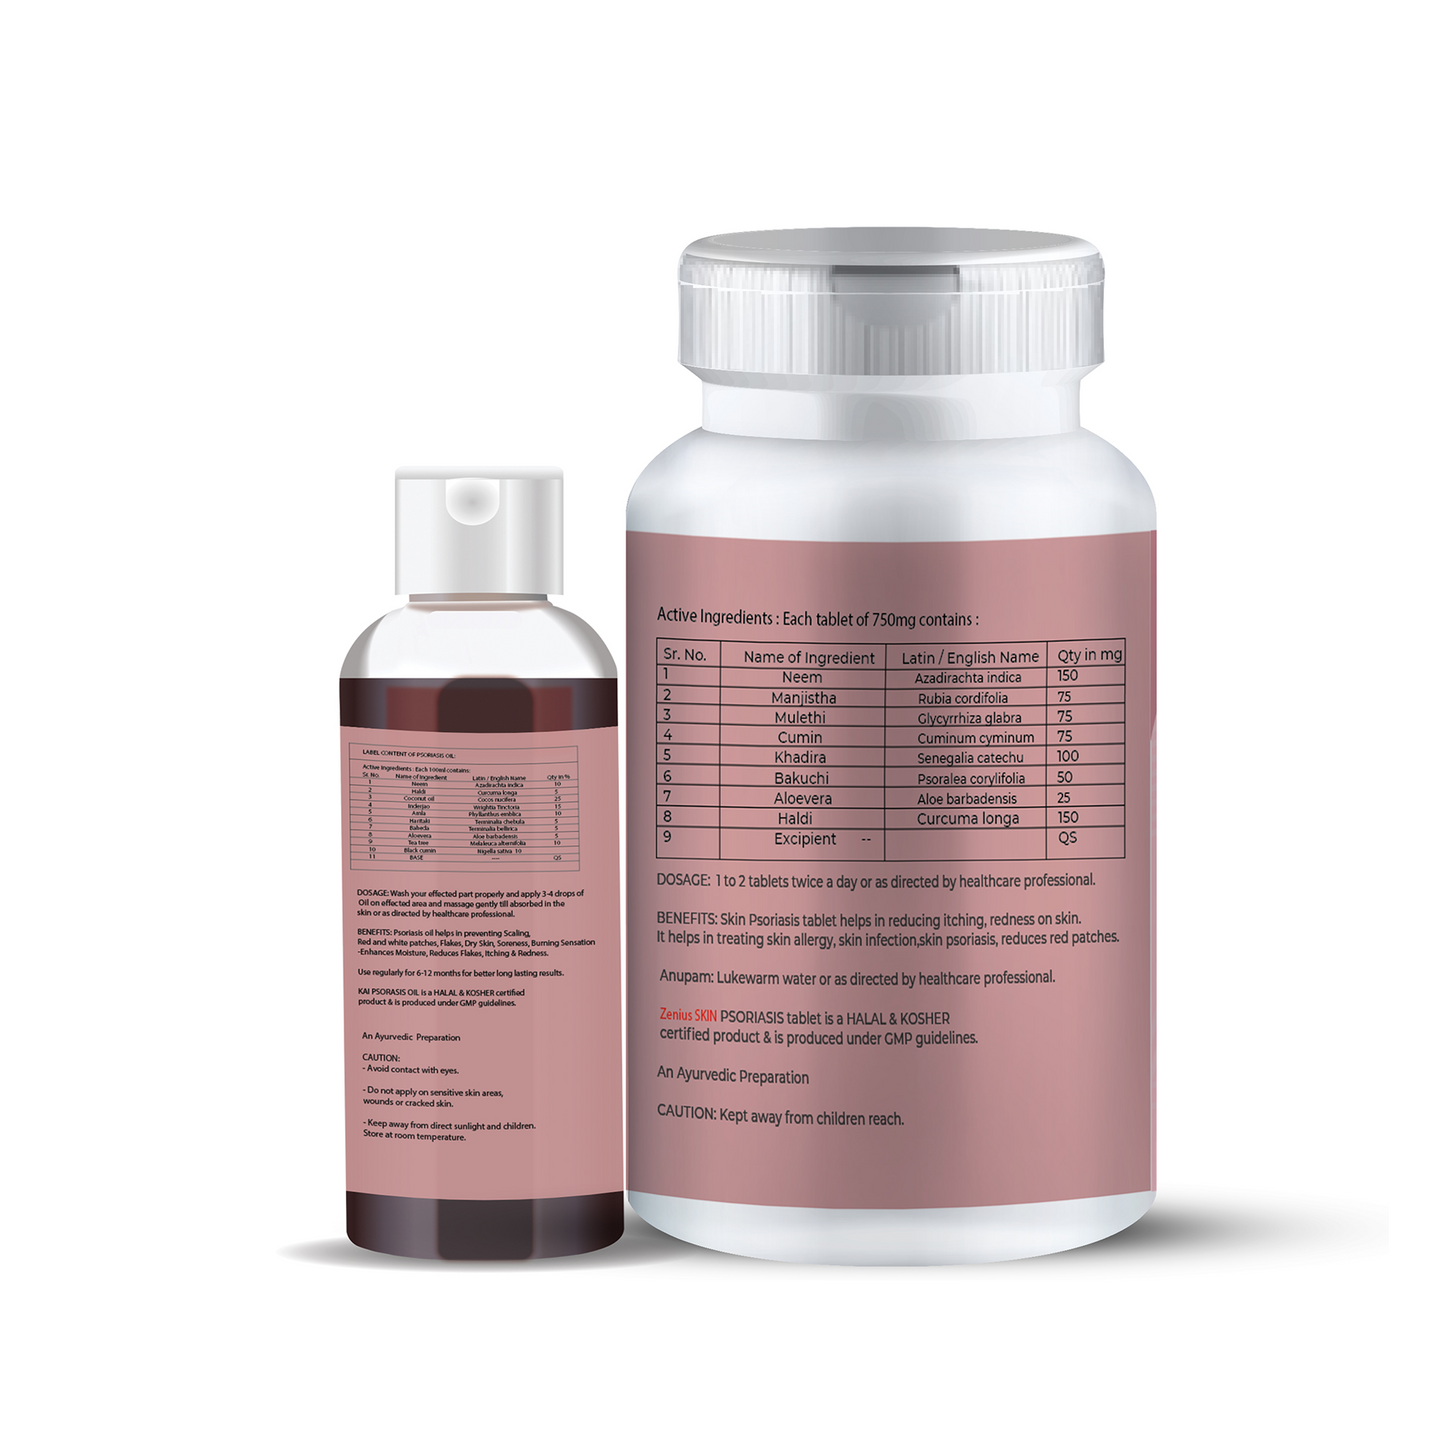 Zenius Skin Psoriasis Kit (100ml Oil & 60 Tablets)